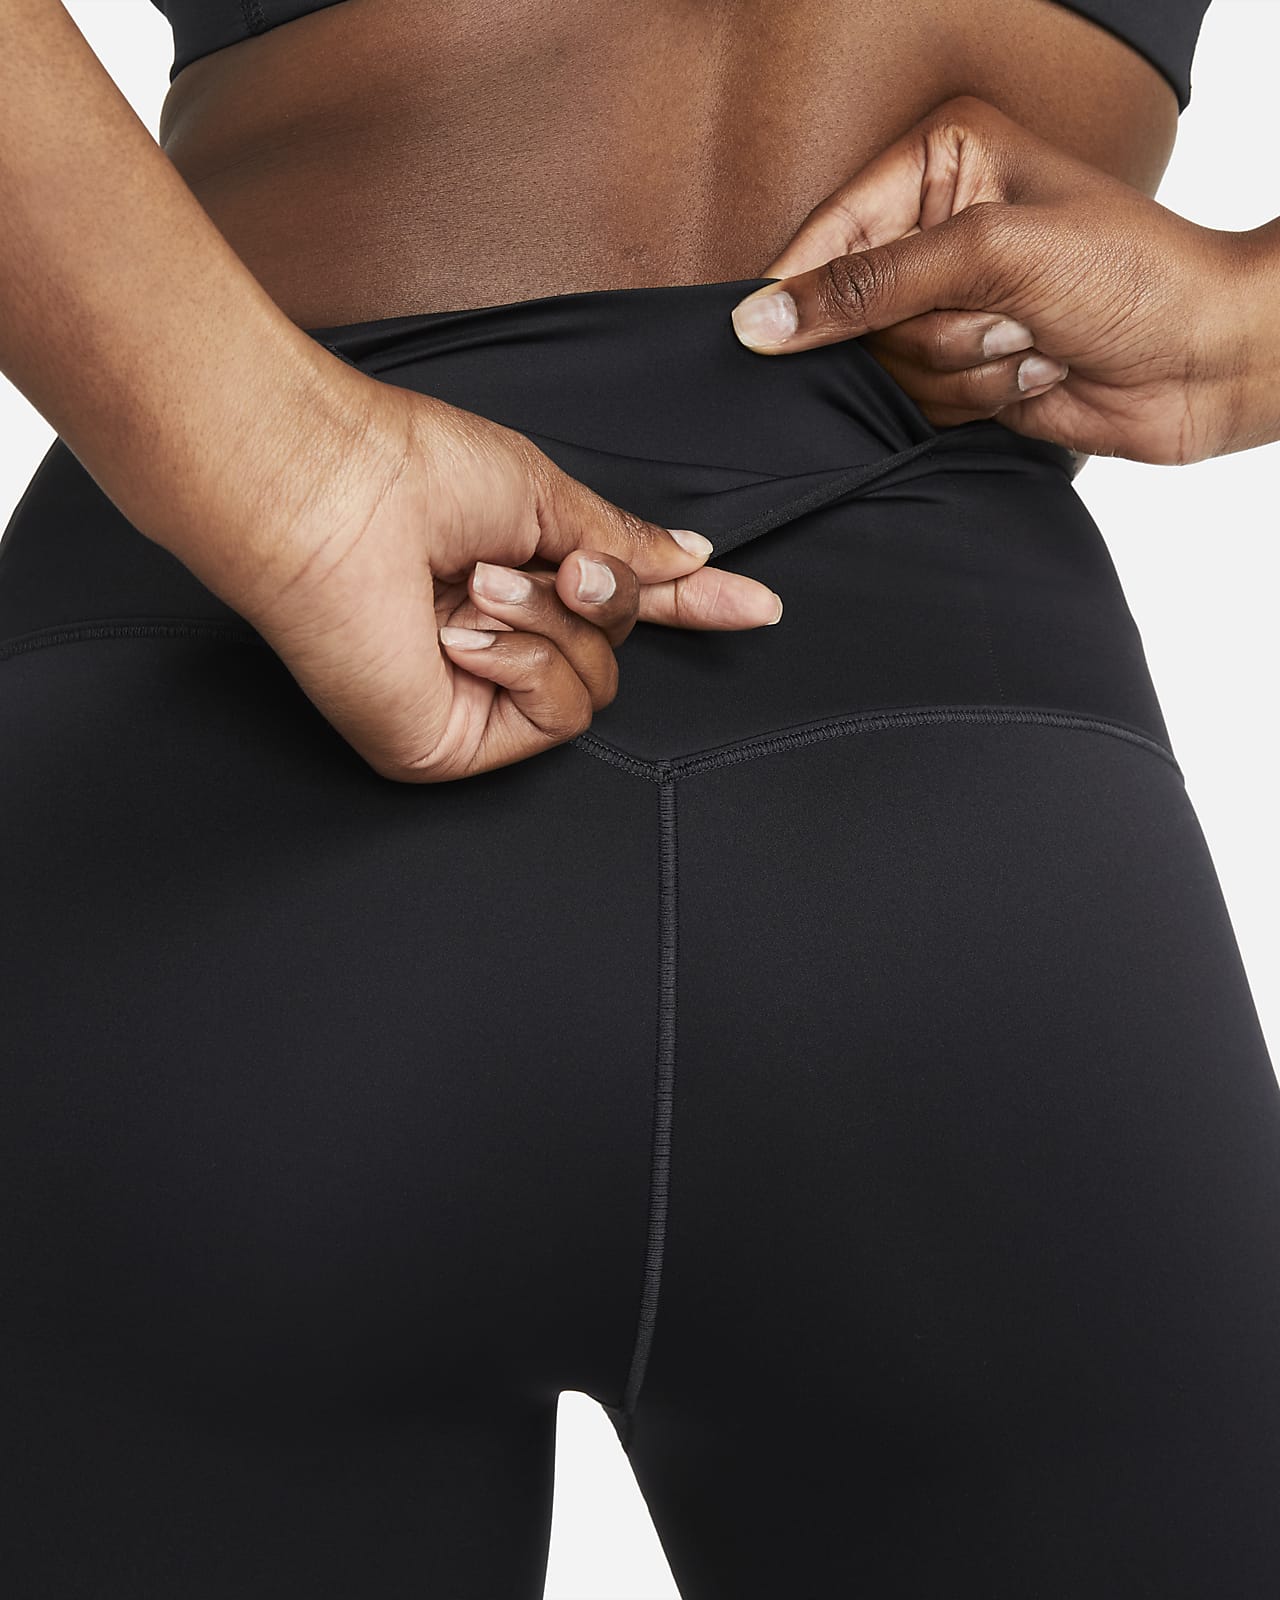 Nike Women's Dri-FIT Mid-Rise leggings in royal - Depop